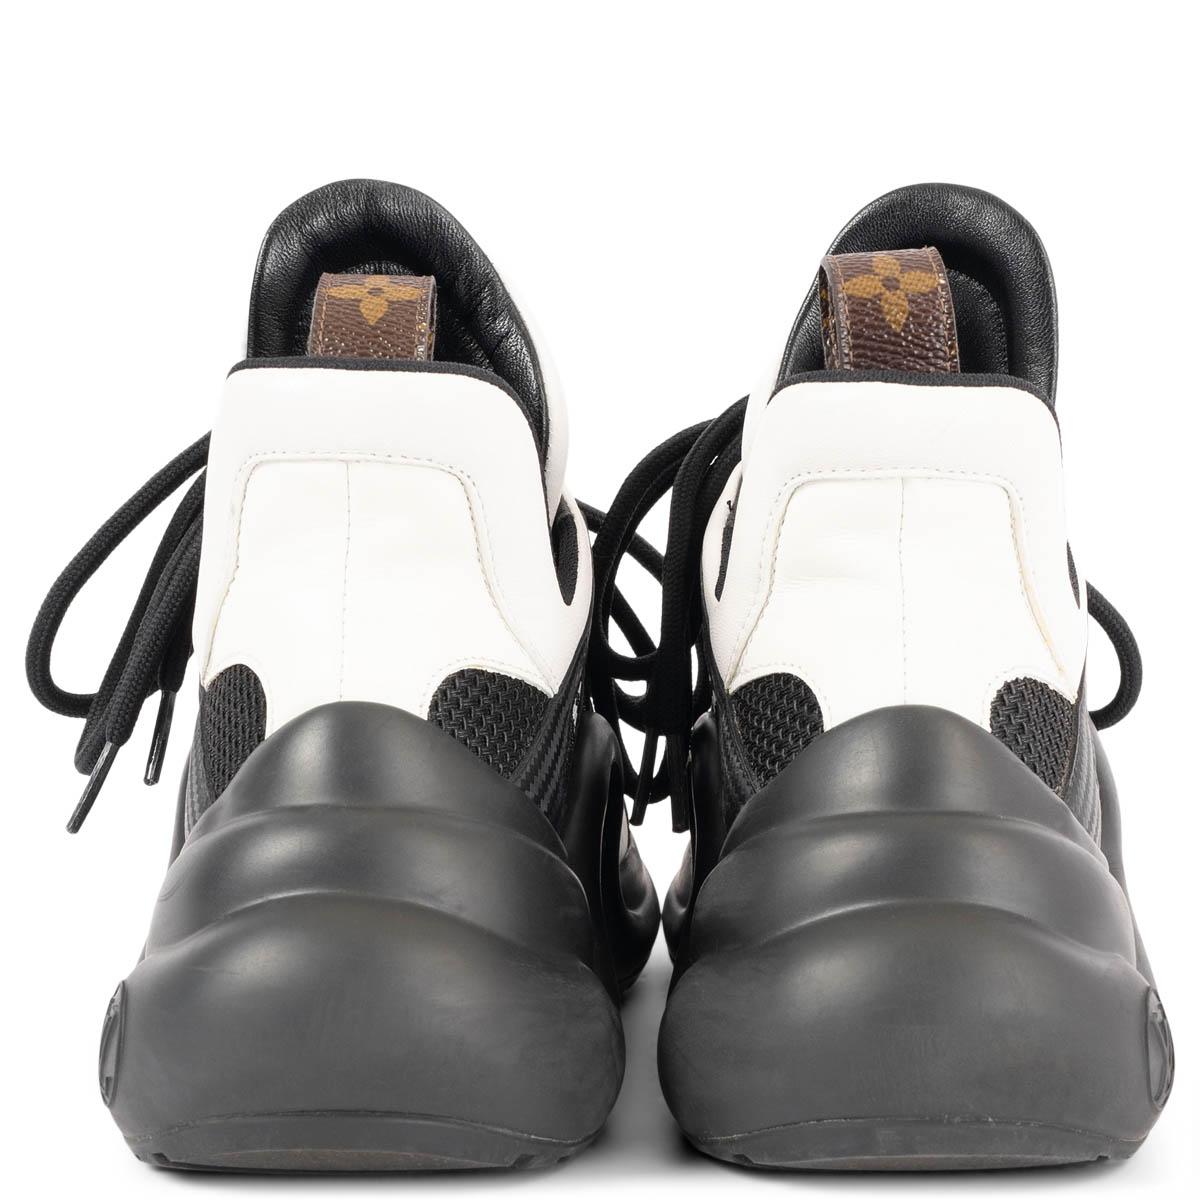 LOUIS VUITTON black & white leather & mesh ARCHLIGHT Shoes 36 For Sale 1